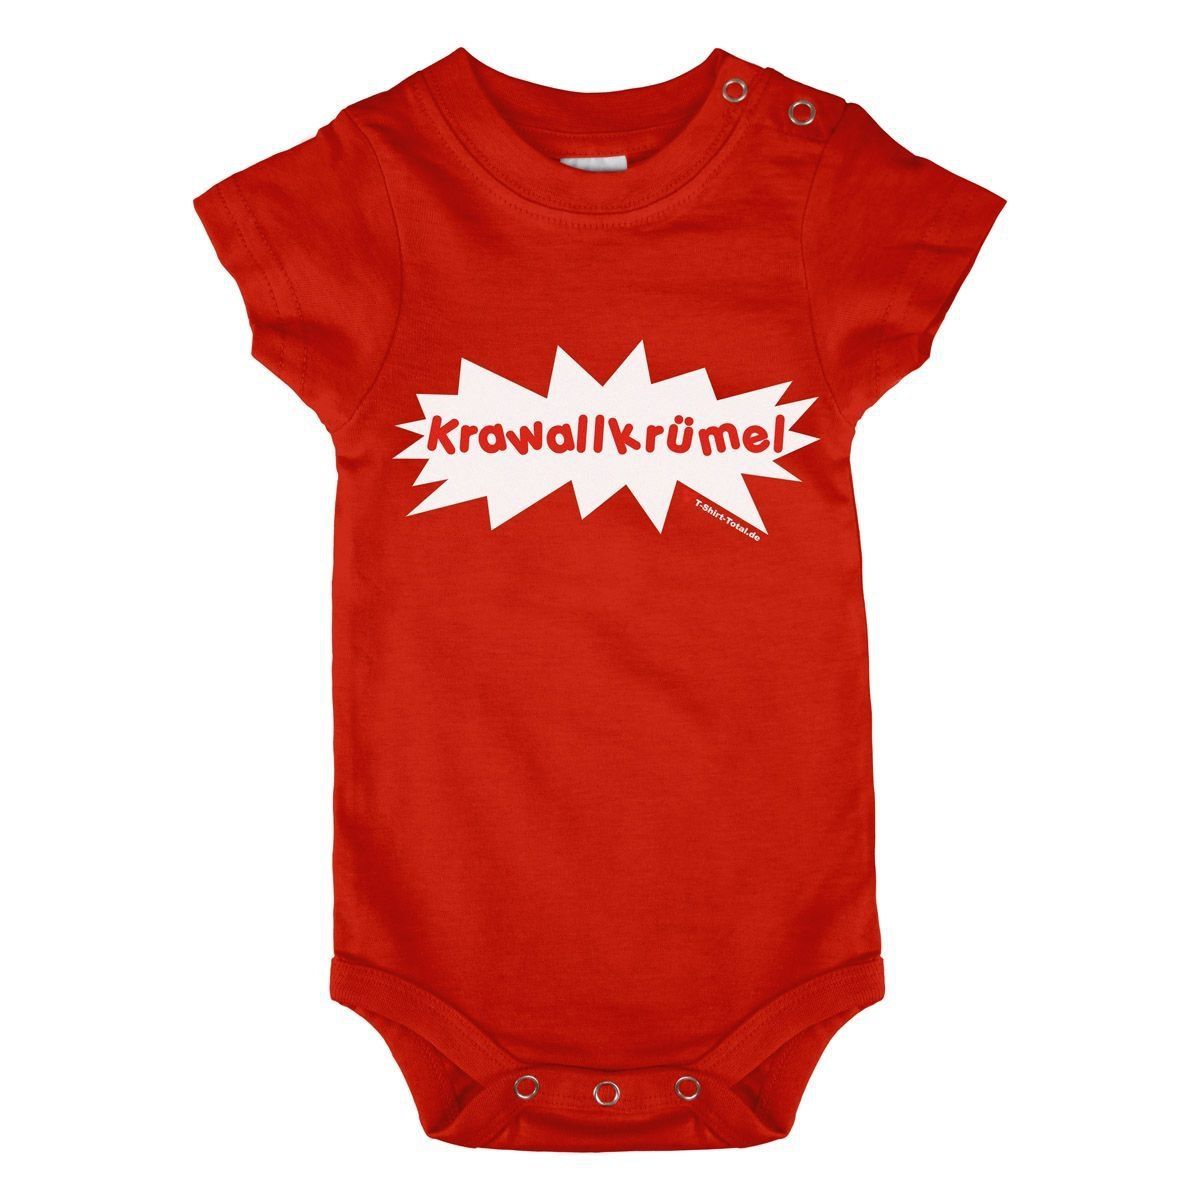 Krawallkrümel Baby Body Kurzarm rot 68 / 74